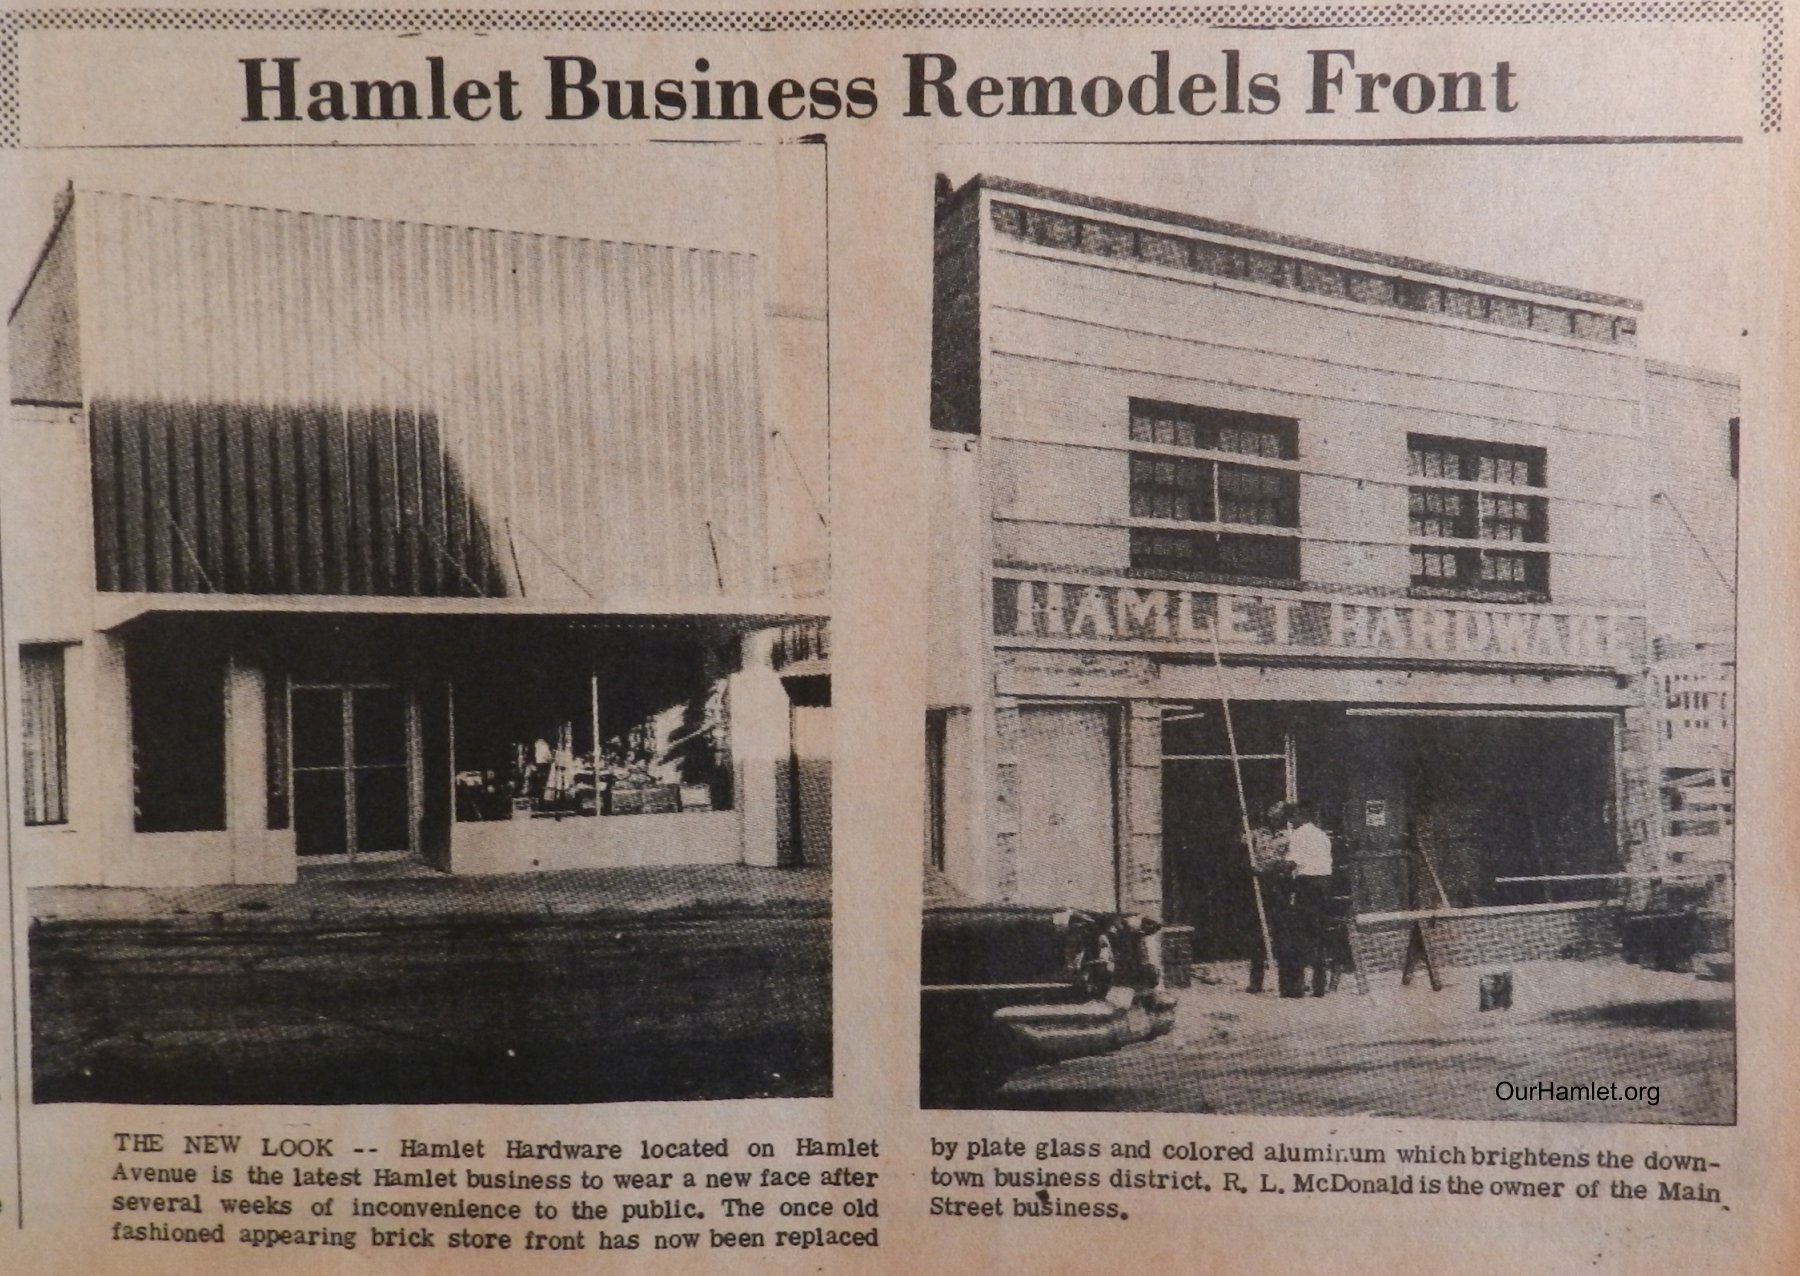 1968 Hamlet Hardware remodels OH.jpg